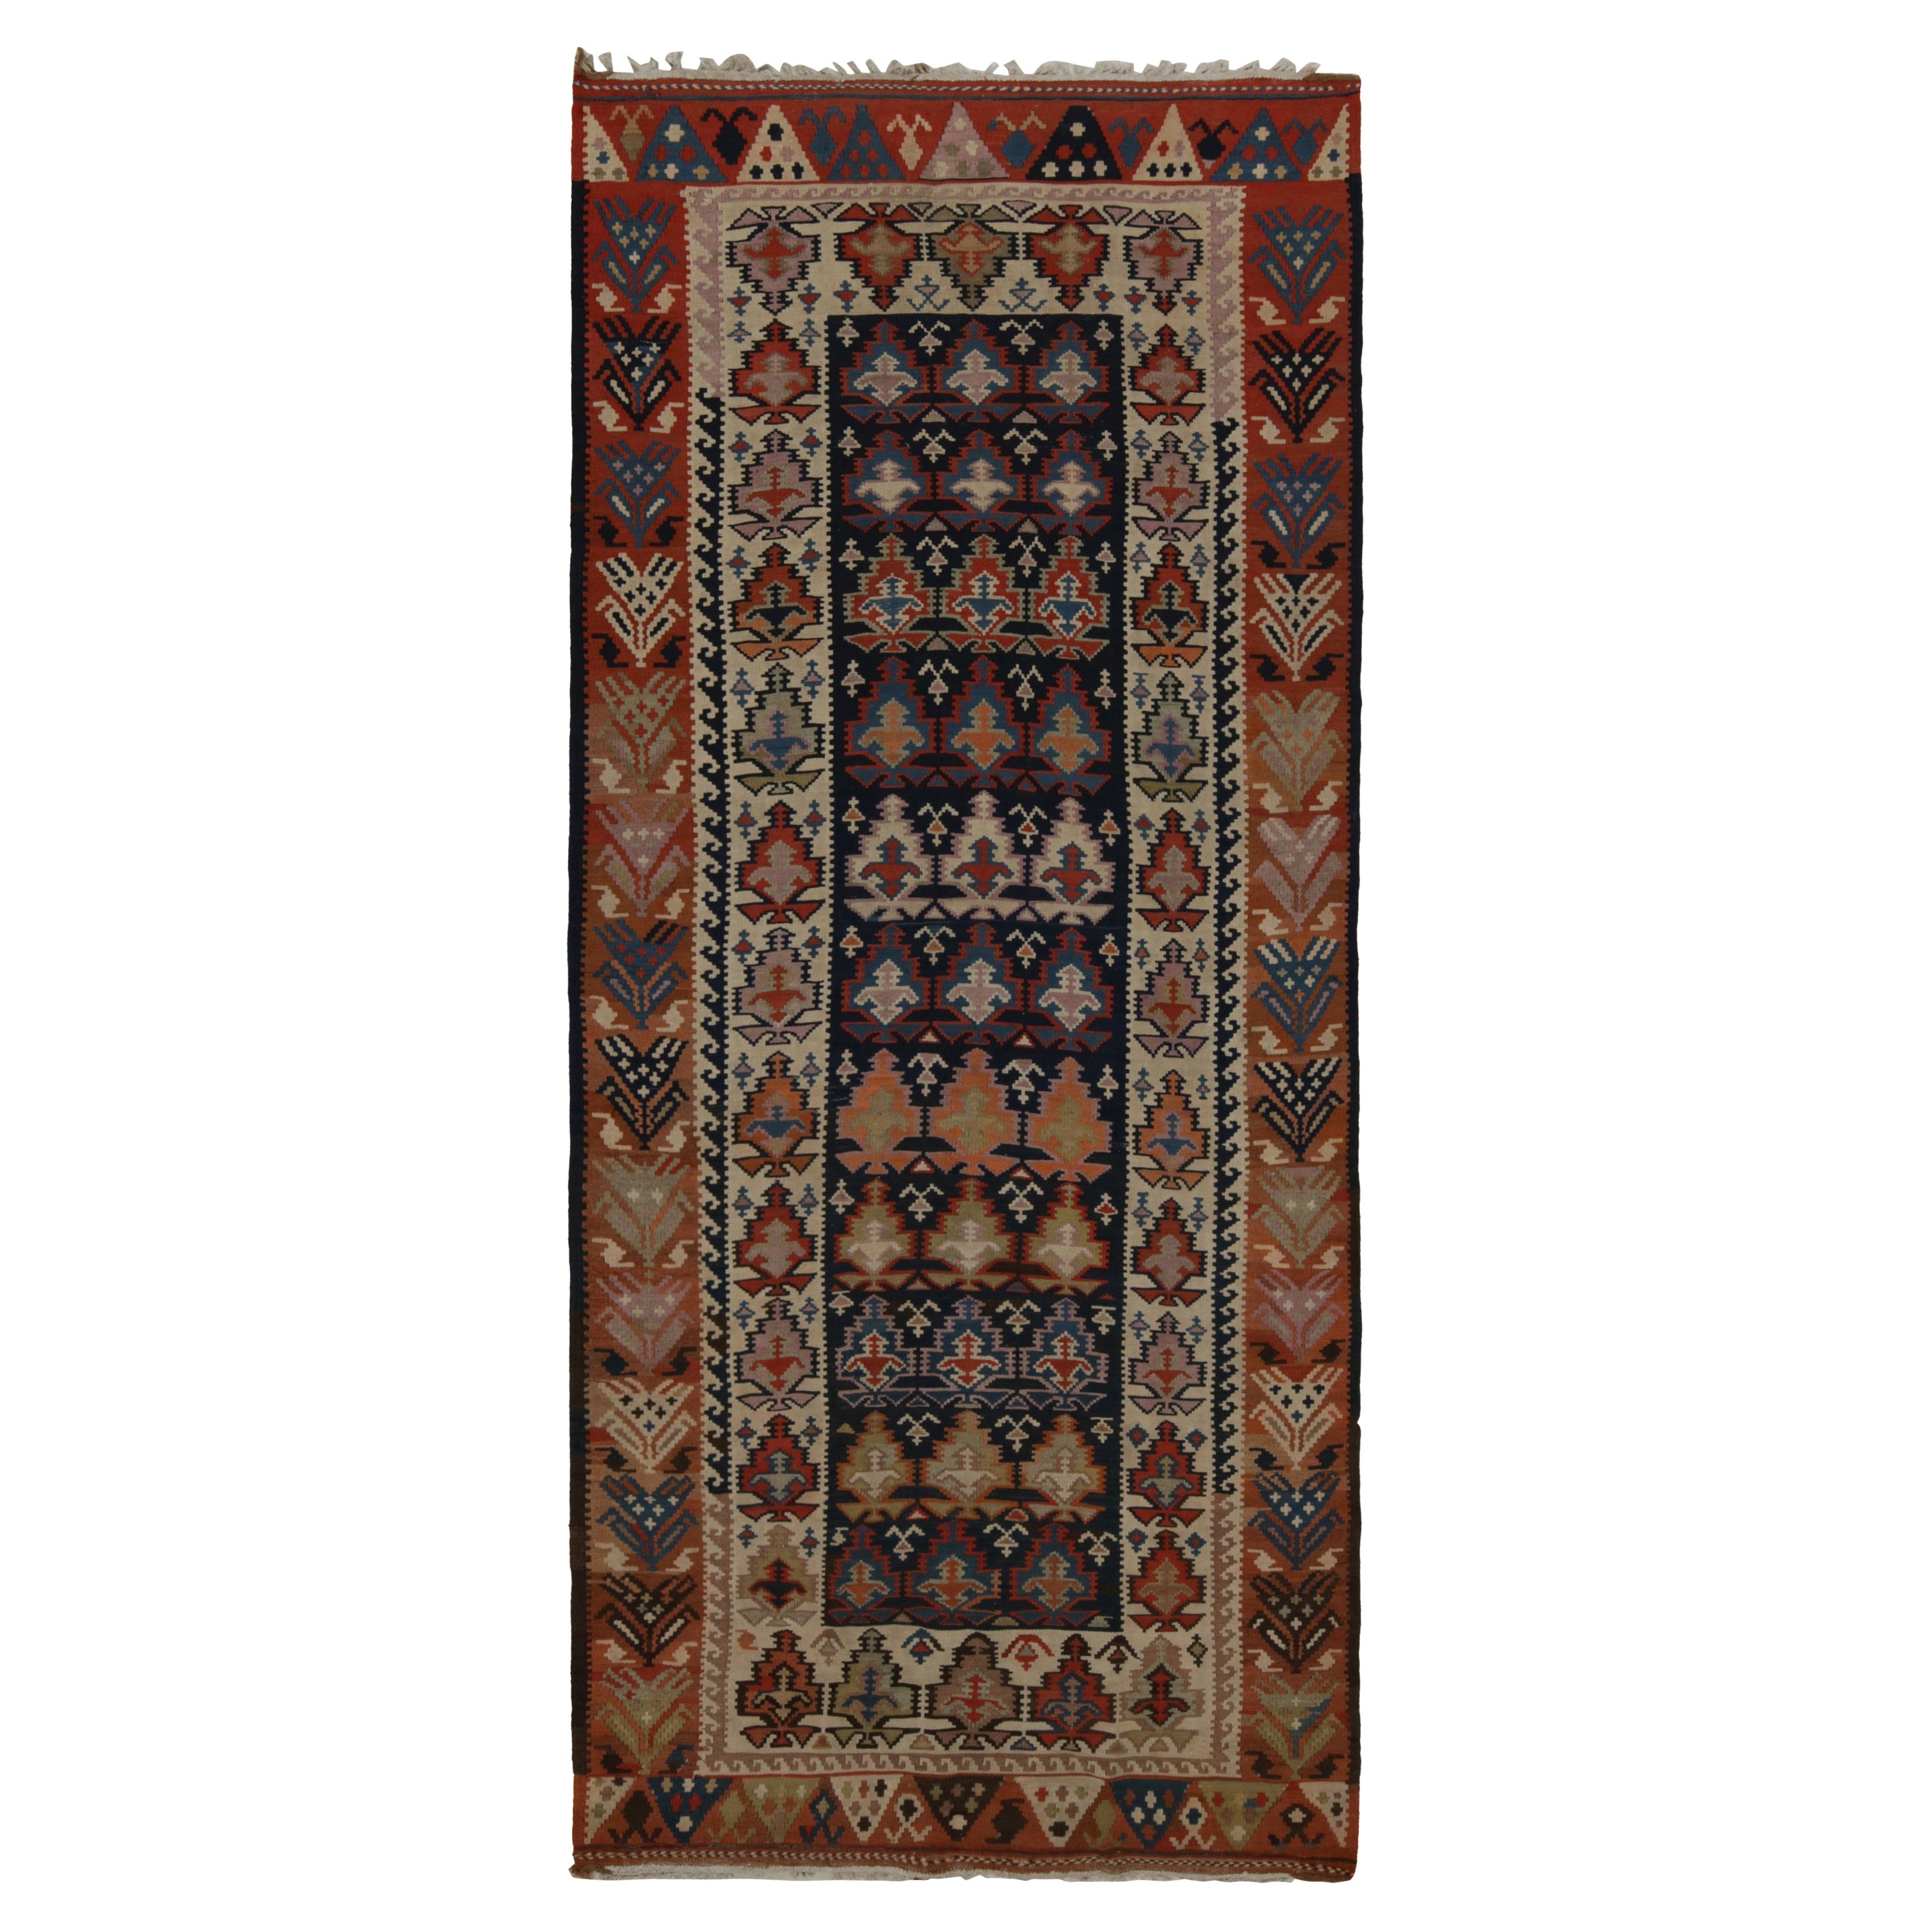 Vintage Tribal Kilim in Blue-Brown Geometric Patterns, from Rug & Kilim For Sale